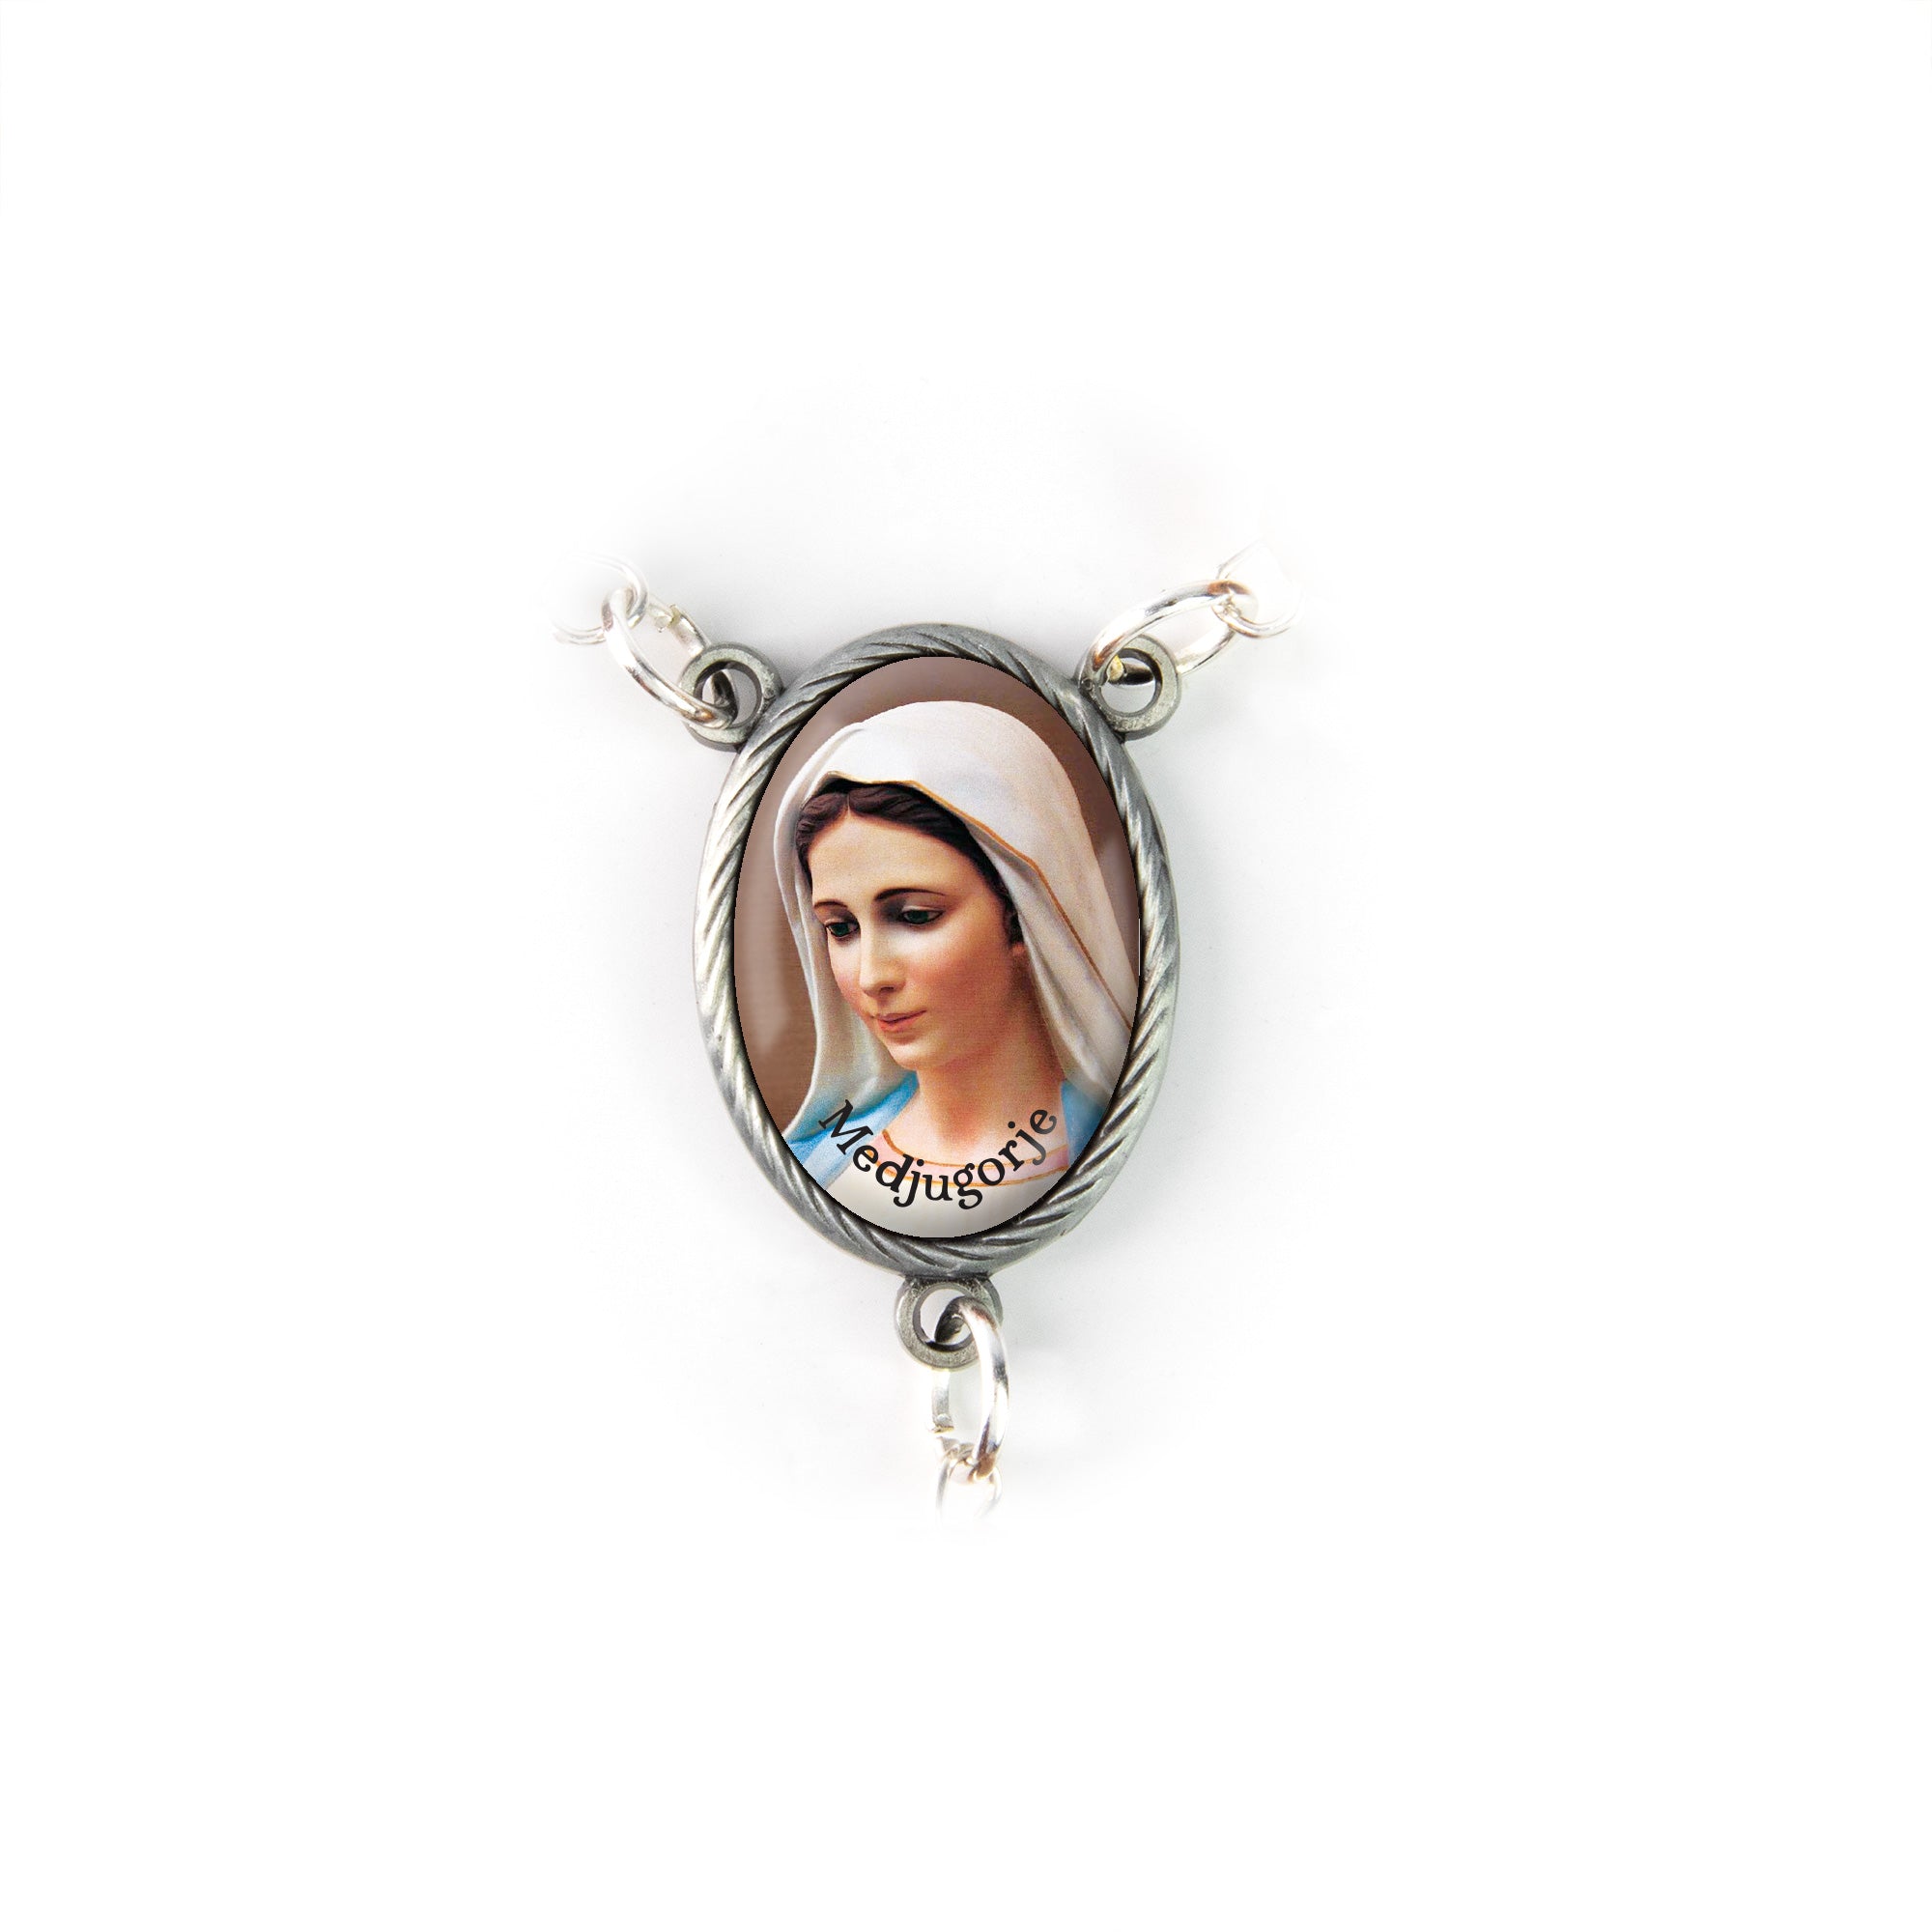 Virgin Mary Medjugorje, Holy Land Olive Wood Pocket Auto Rosary, Made in Bethlehem icon detail